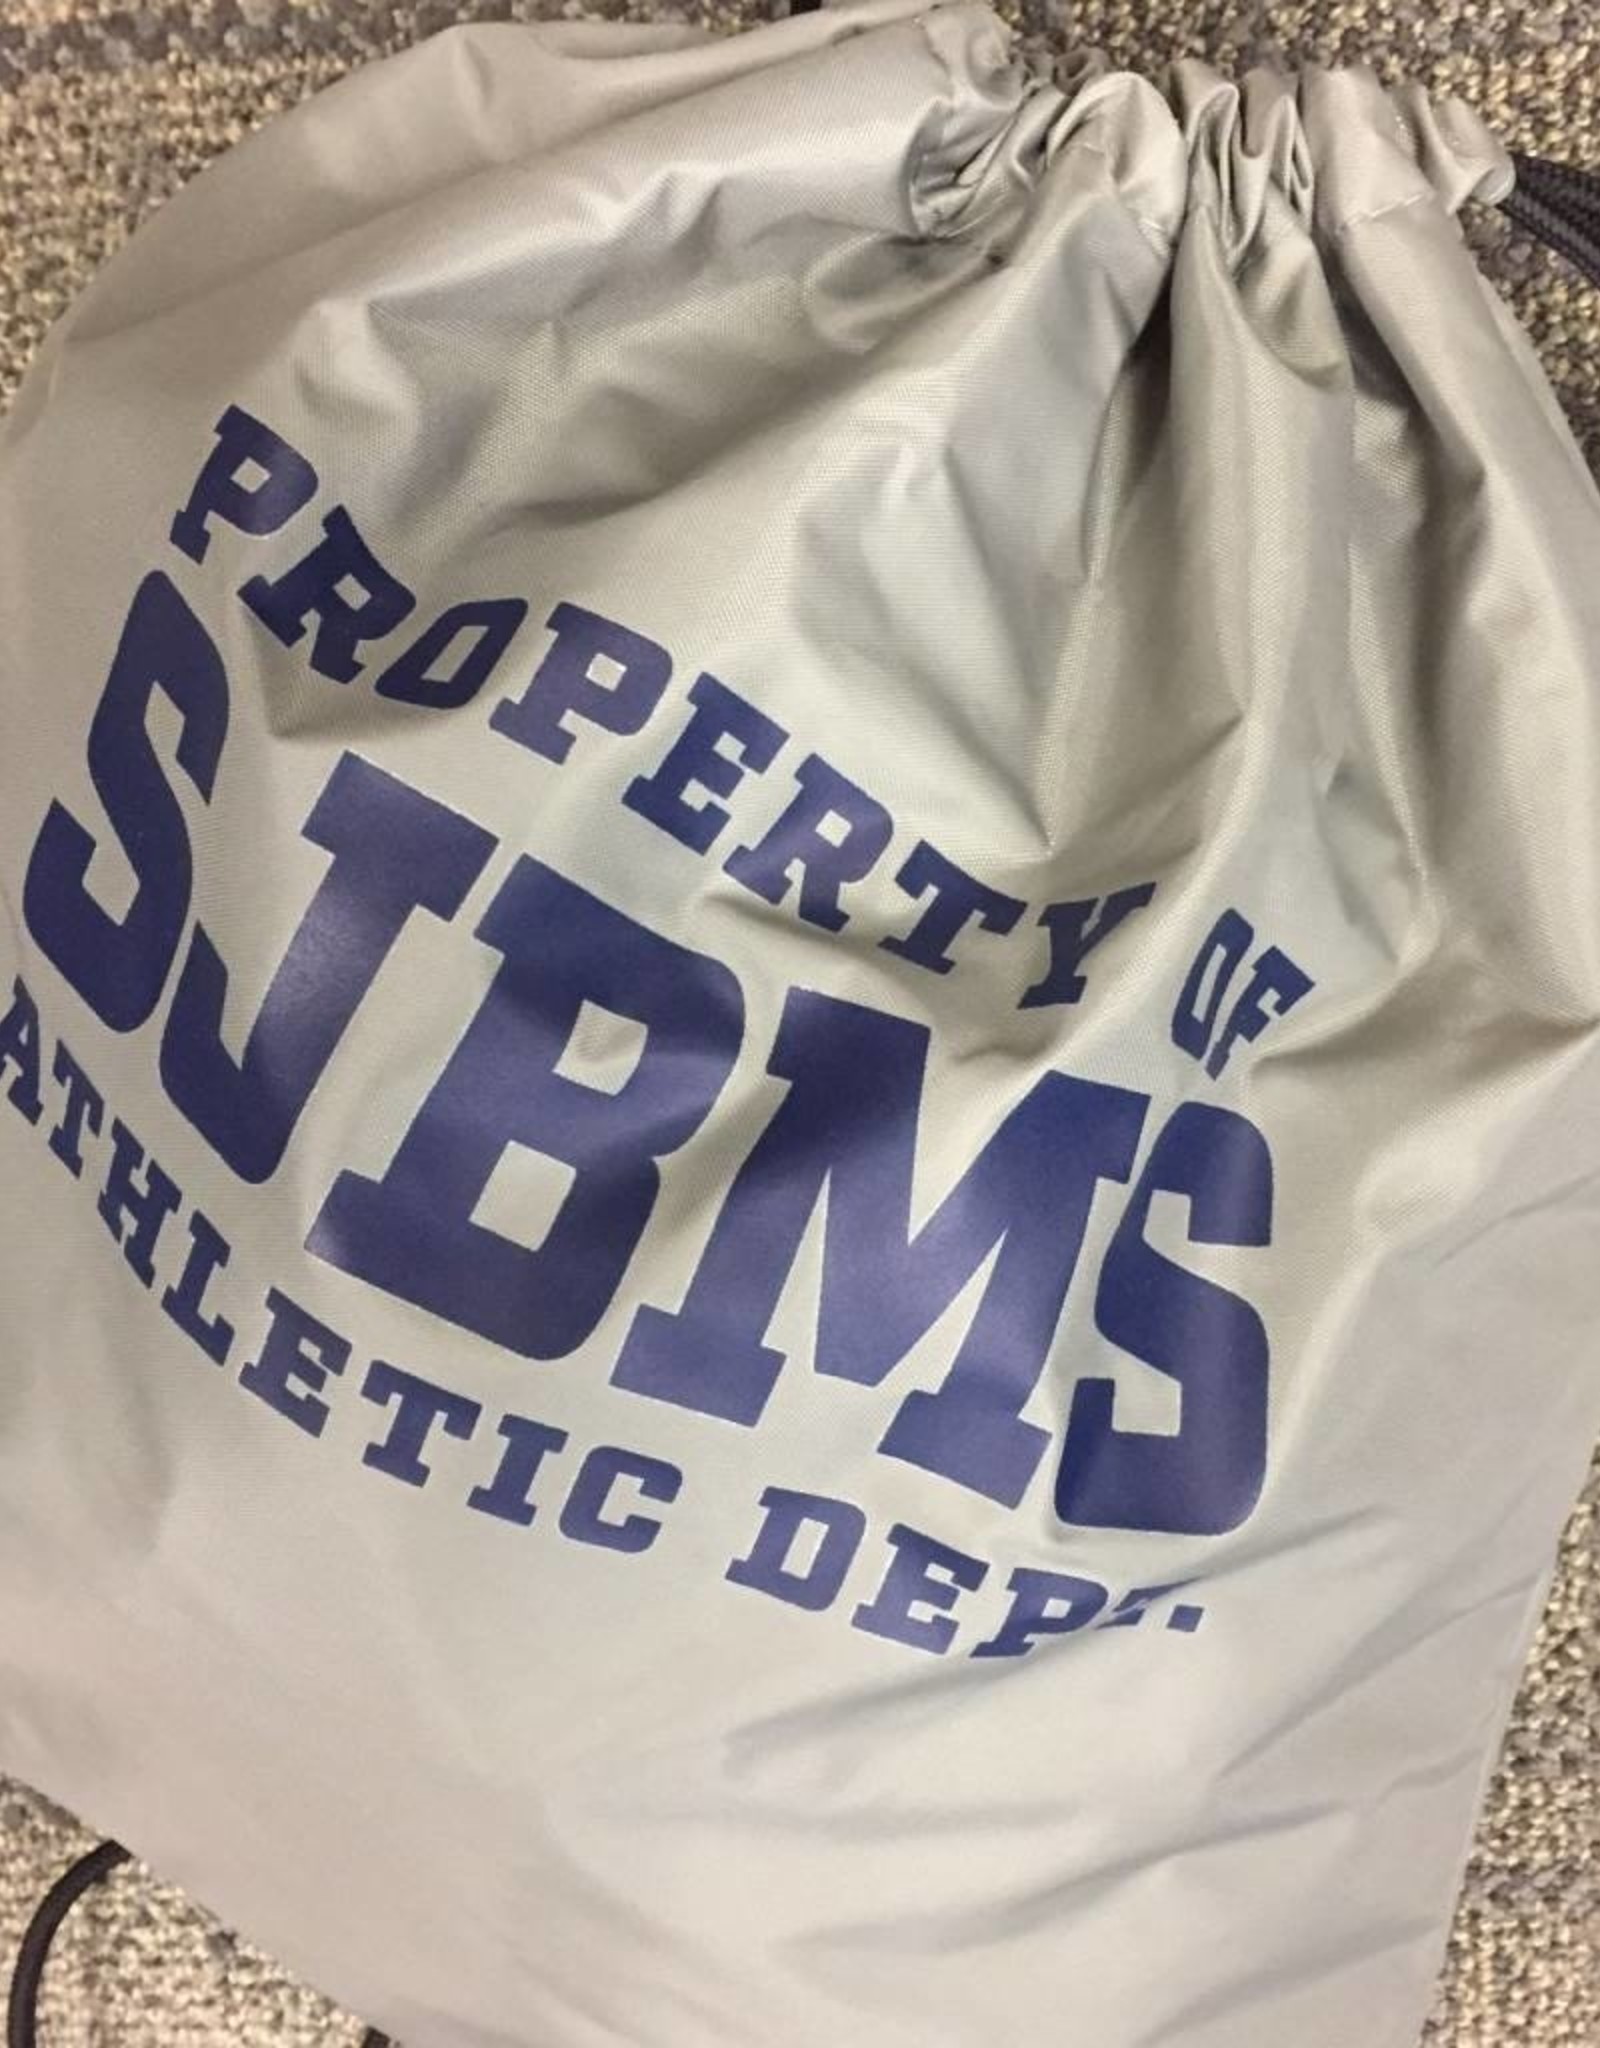 NON-UNIFORM Bag - Lightweight Cinch bag, navy or gray w/ SJBMS logo